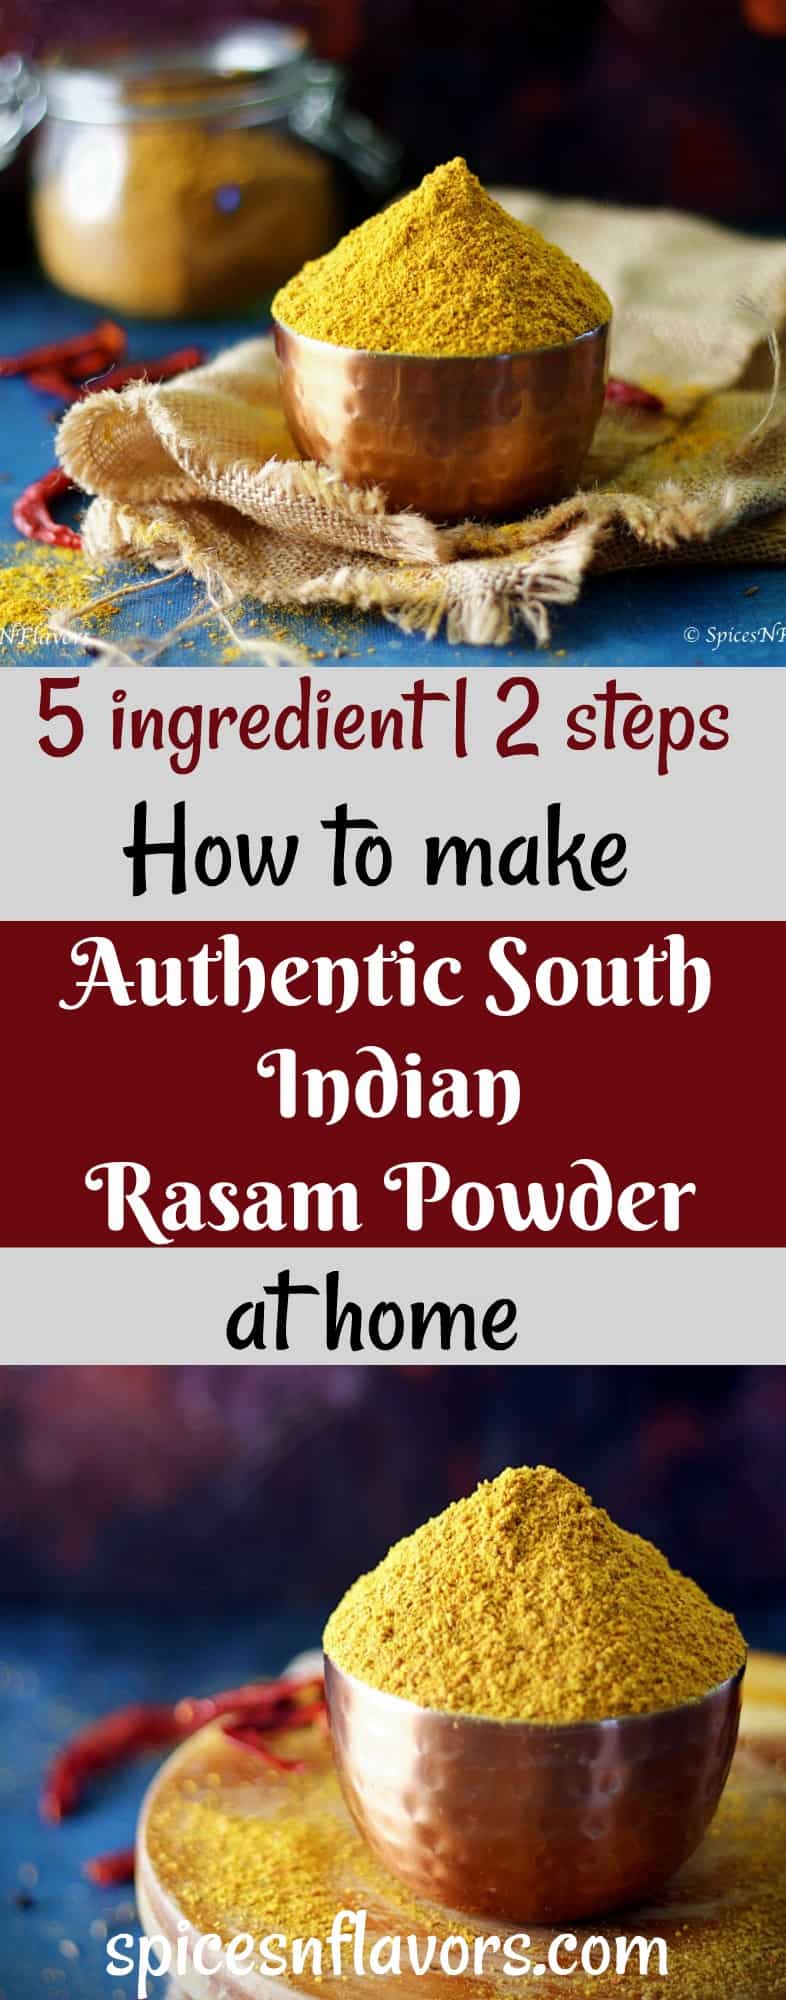 rasam powder rasam podi south indian rasam powder recipe how to make rasam powder at home homemade rasam powder rasam powder recipe